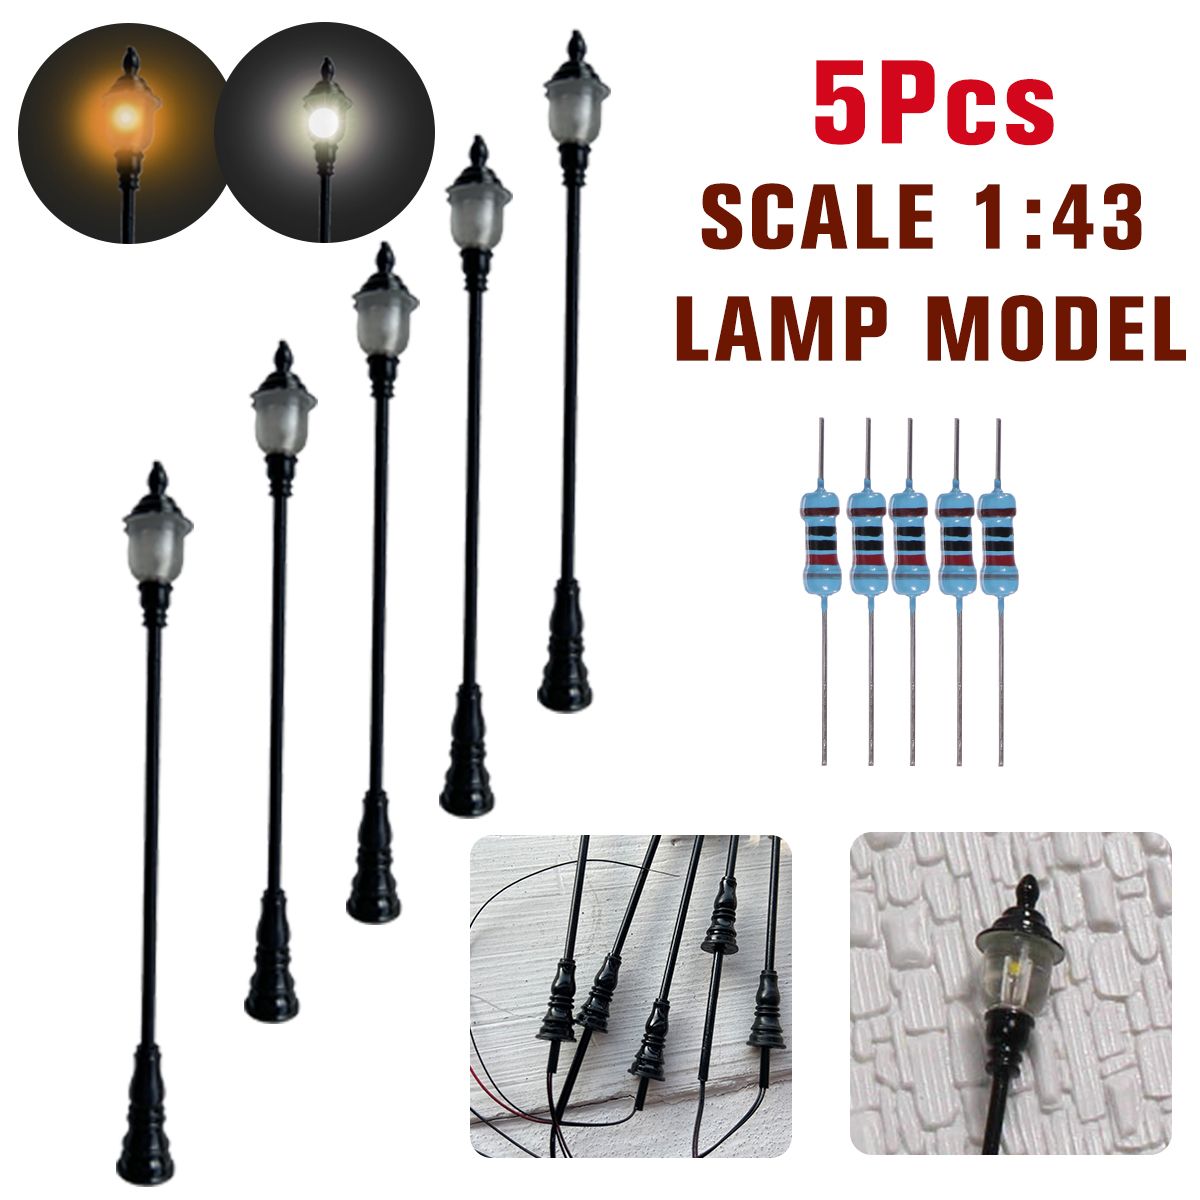 5PcsSet-143-HO-Scale-LED-Model-Post-Street-Light-Railway-Train-Lamps-1616839